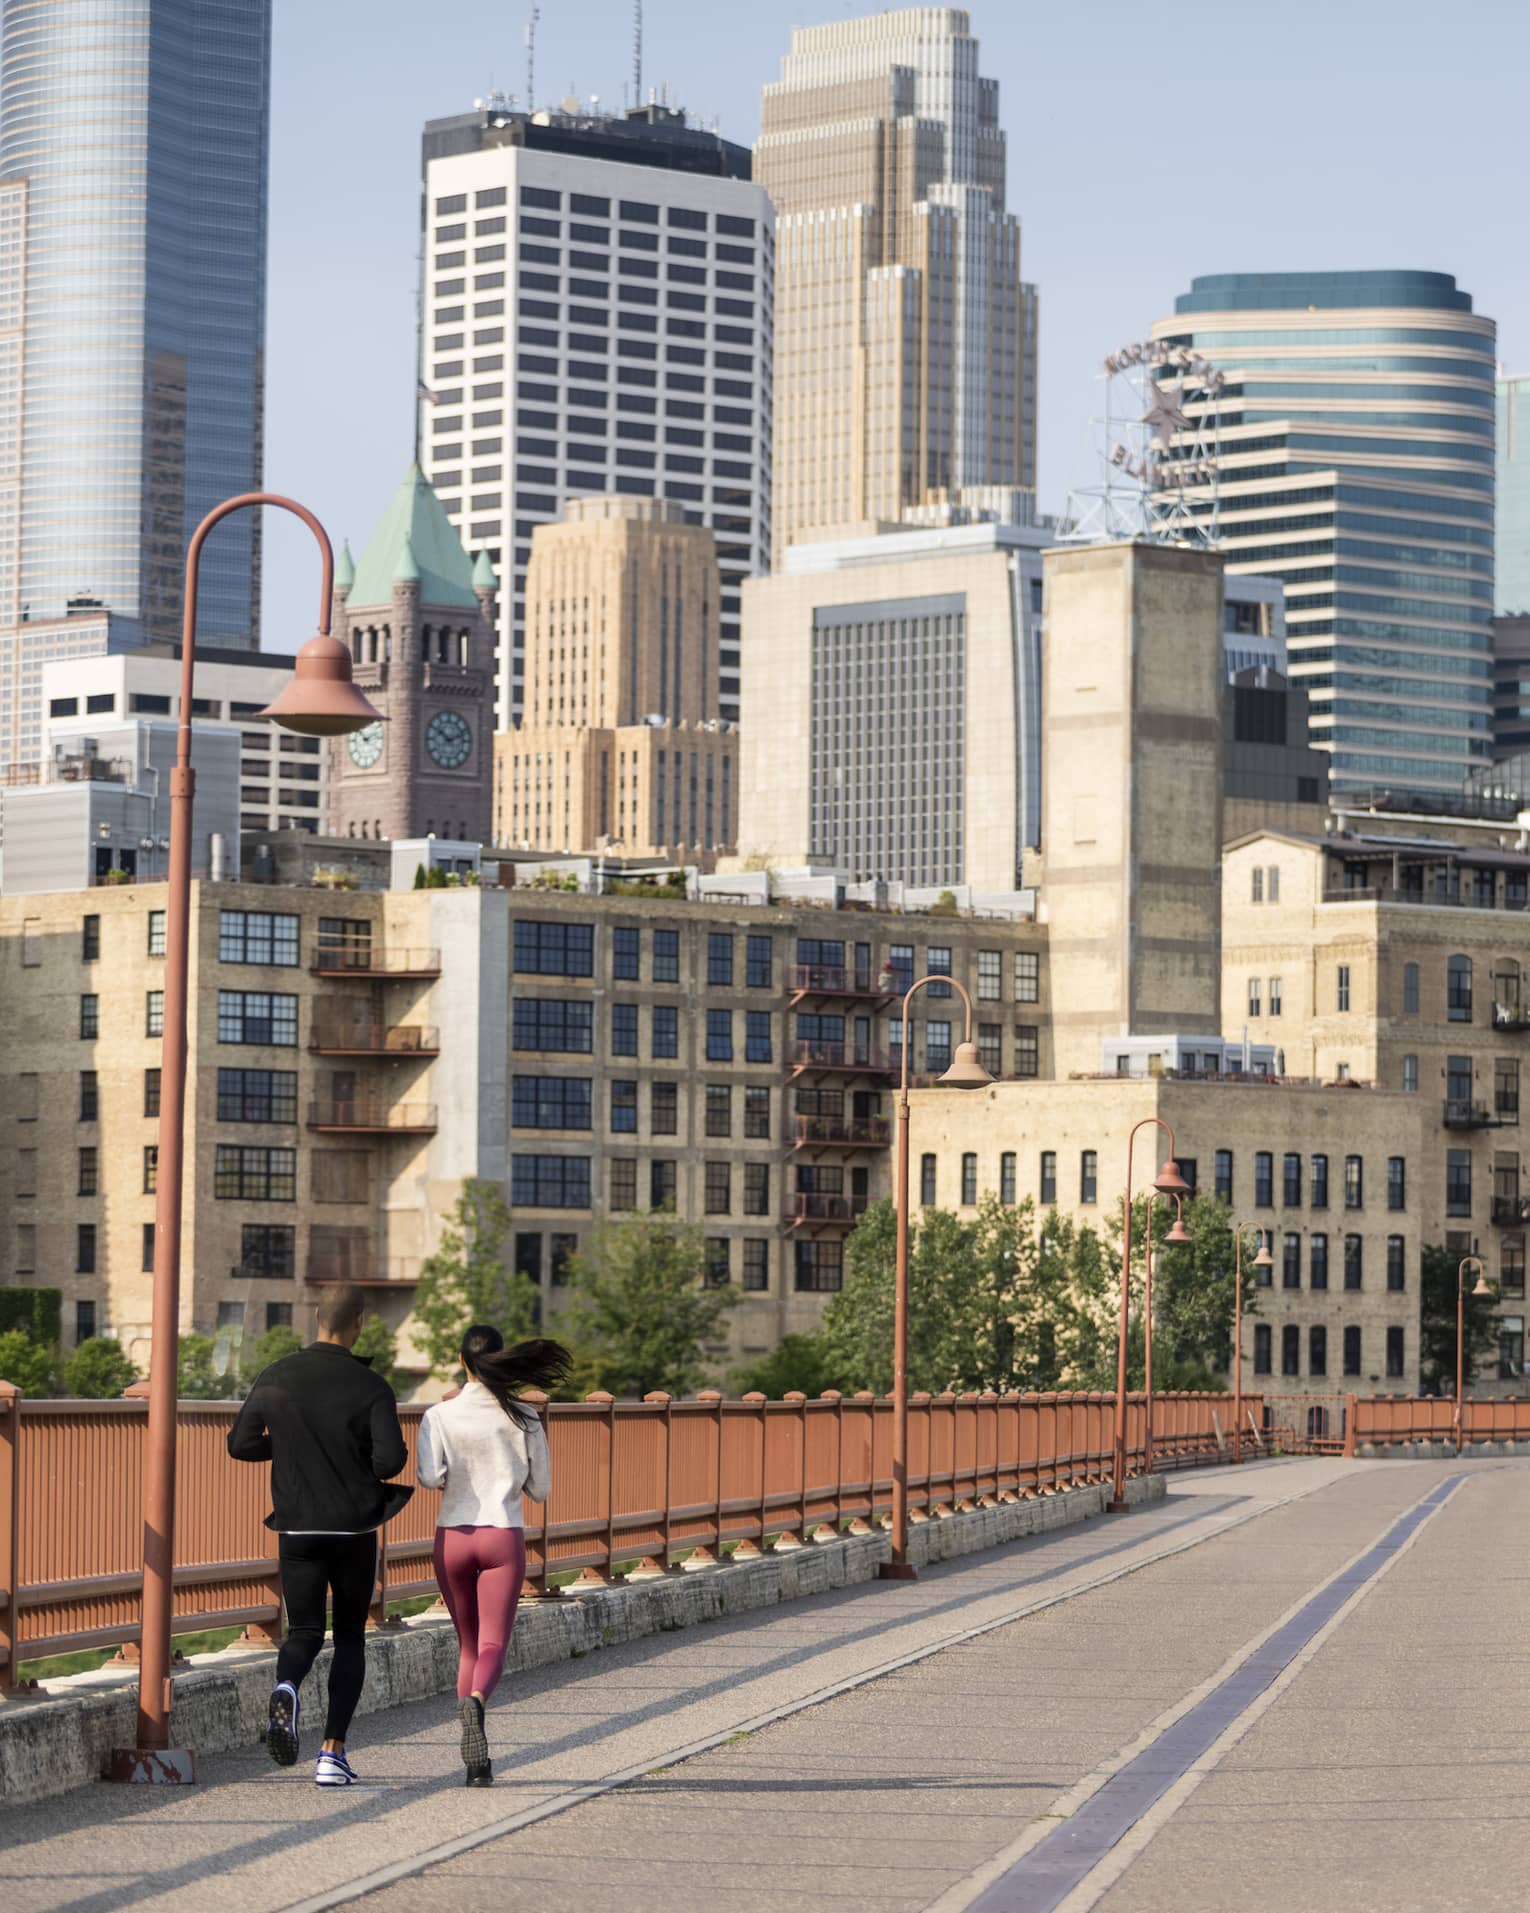 Minnesota city view from bridge, where two people run